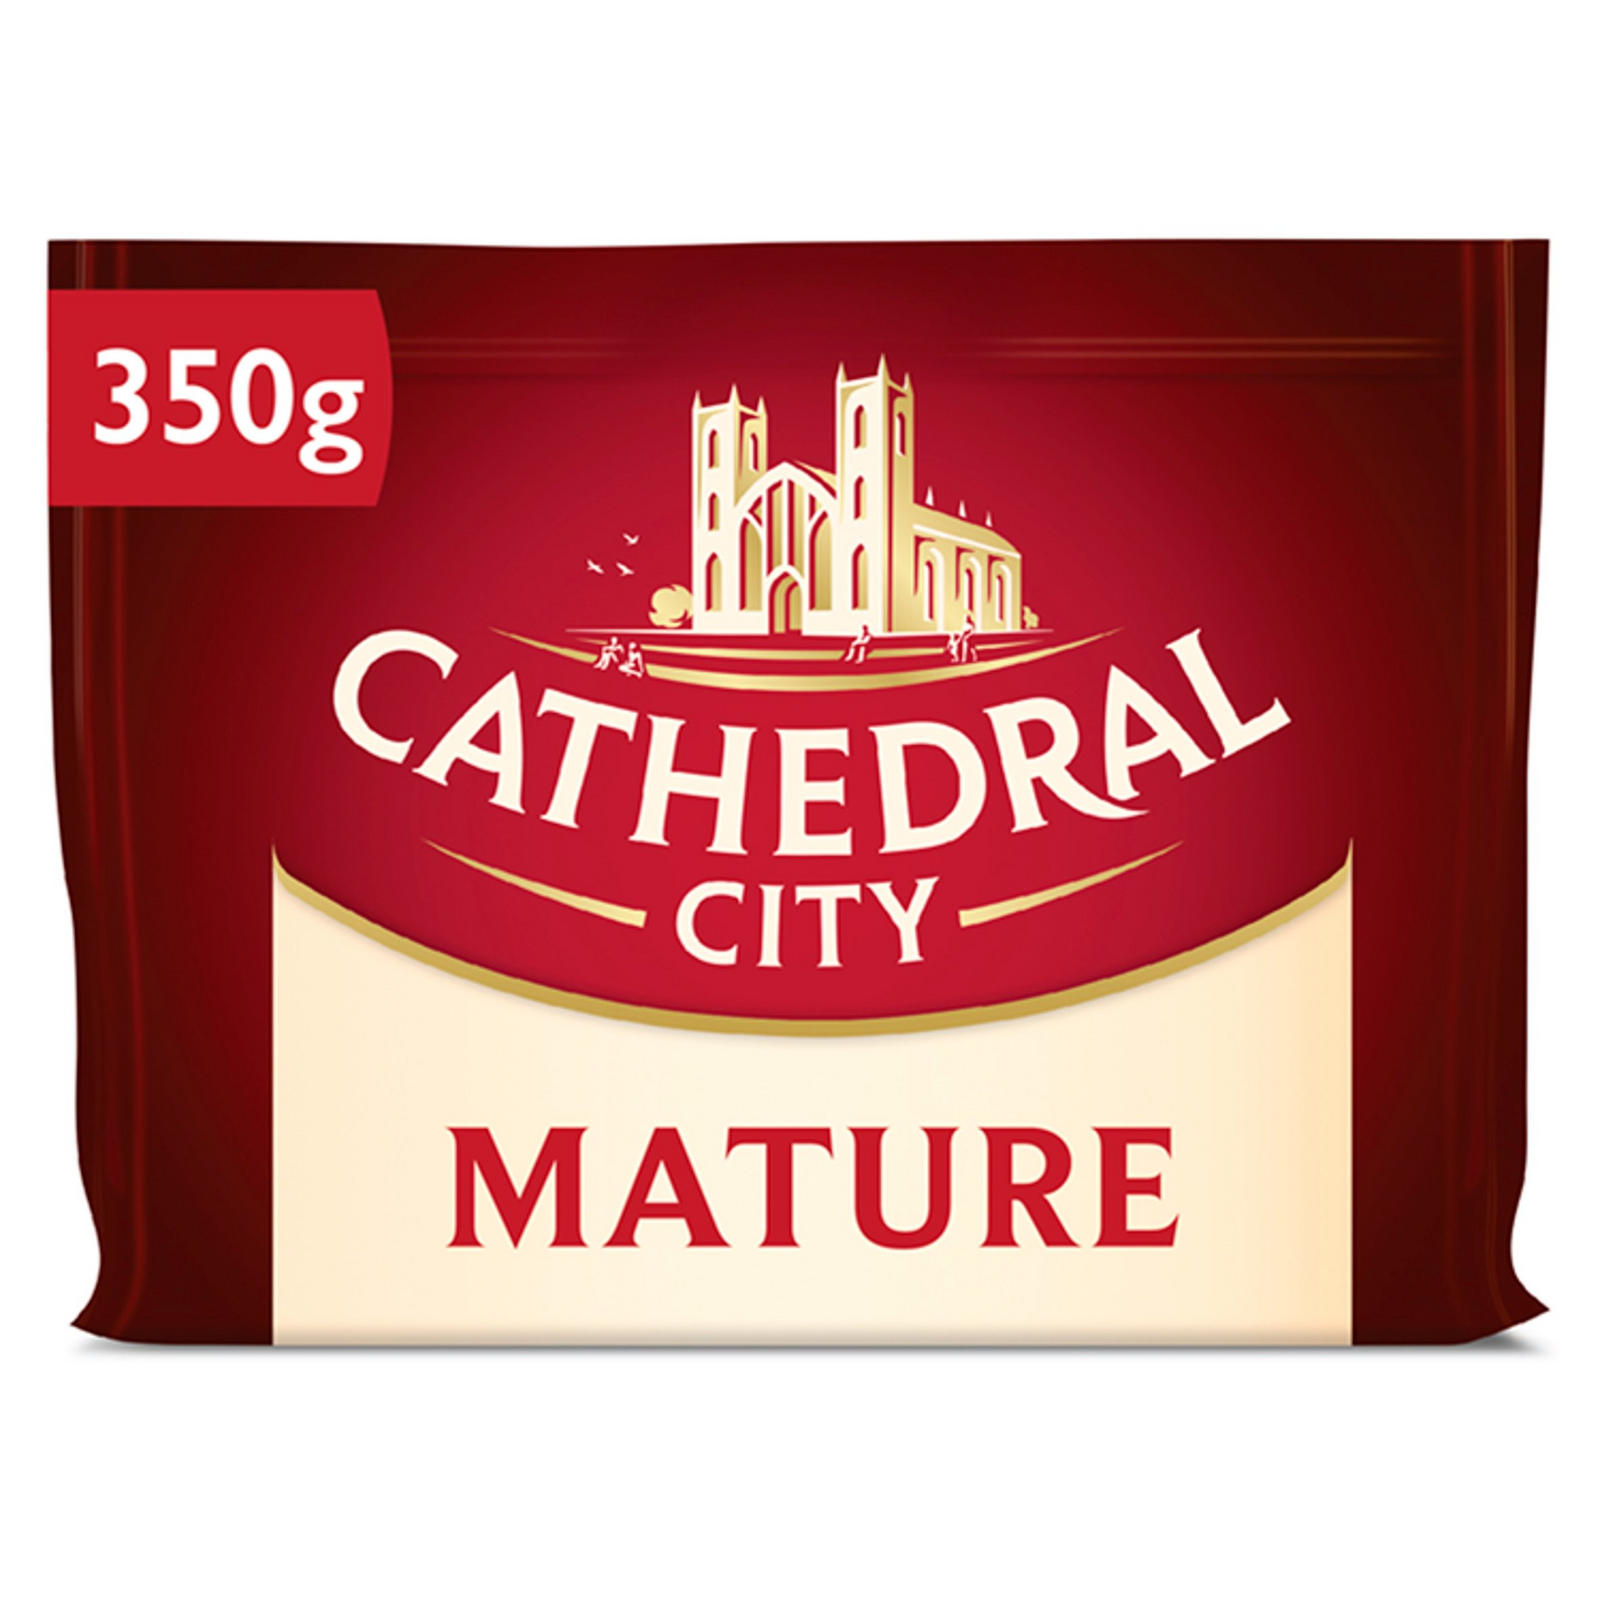 Cathedral Cheddar